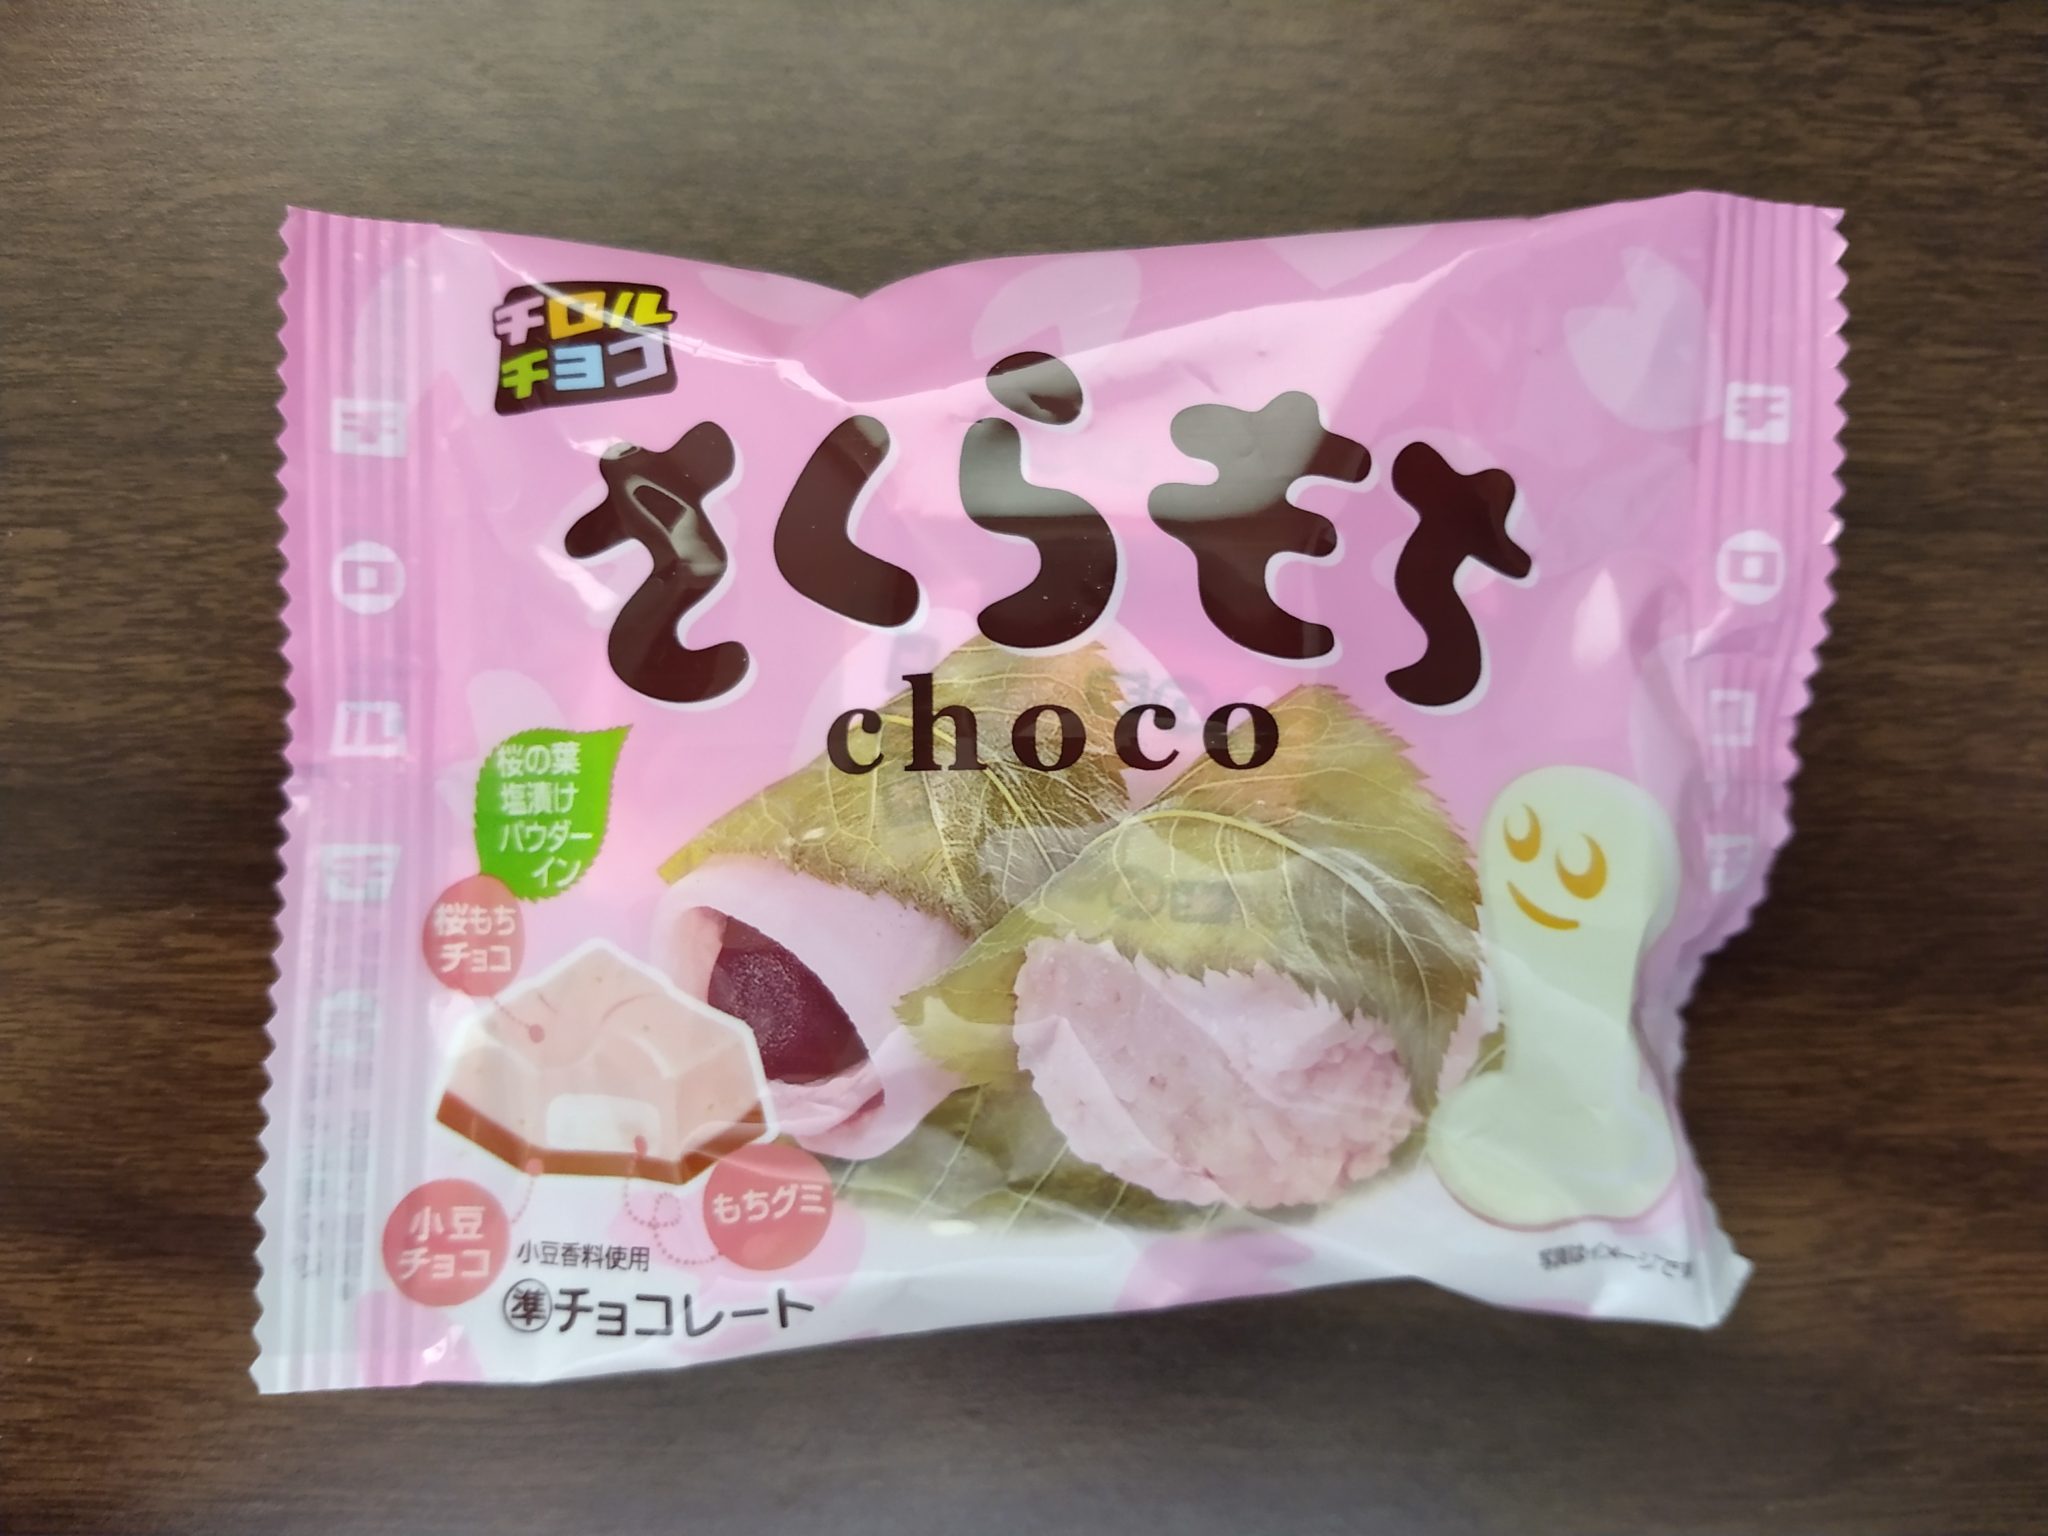 Tirol Chocolate – Sakura Mochi